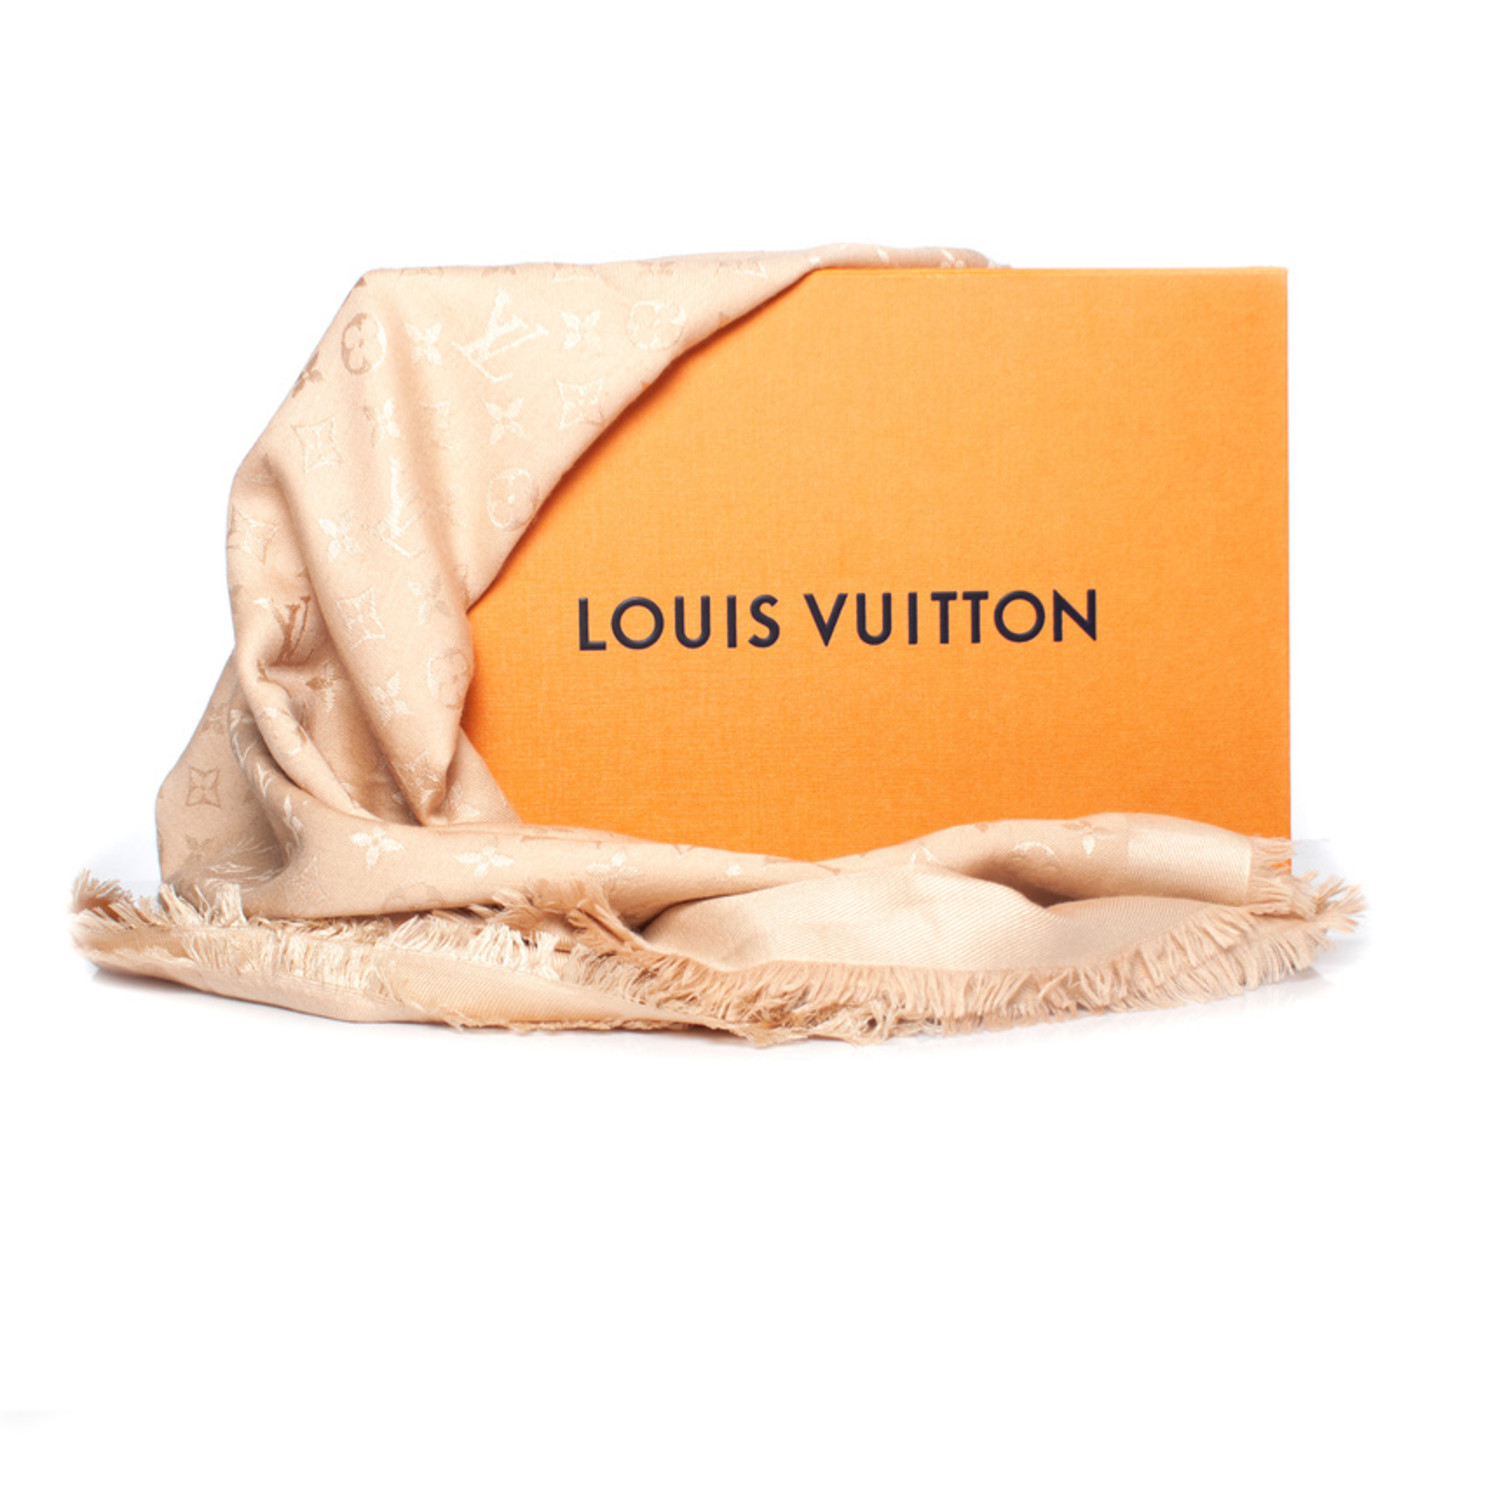 Pin on Shopping - Scarfs - Louis Vuitton